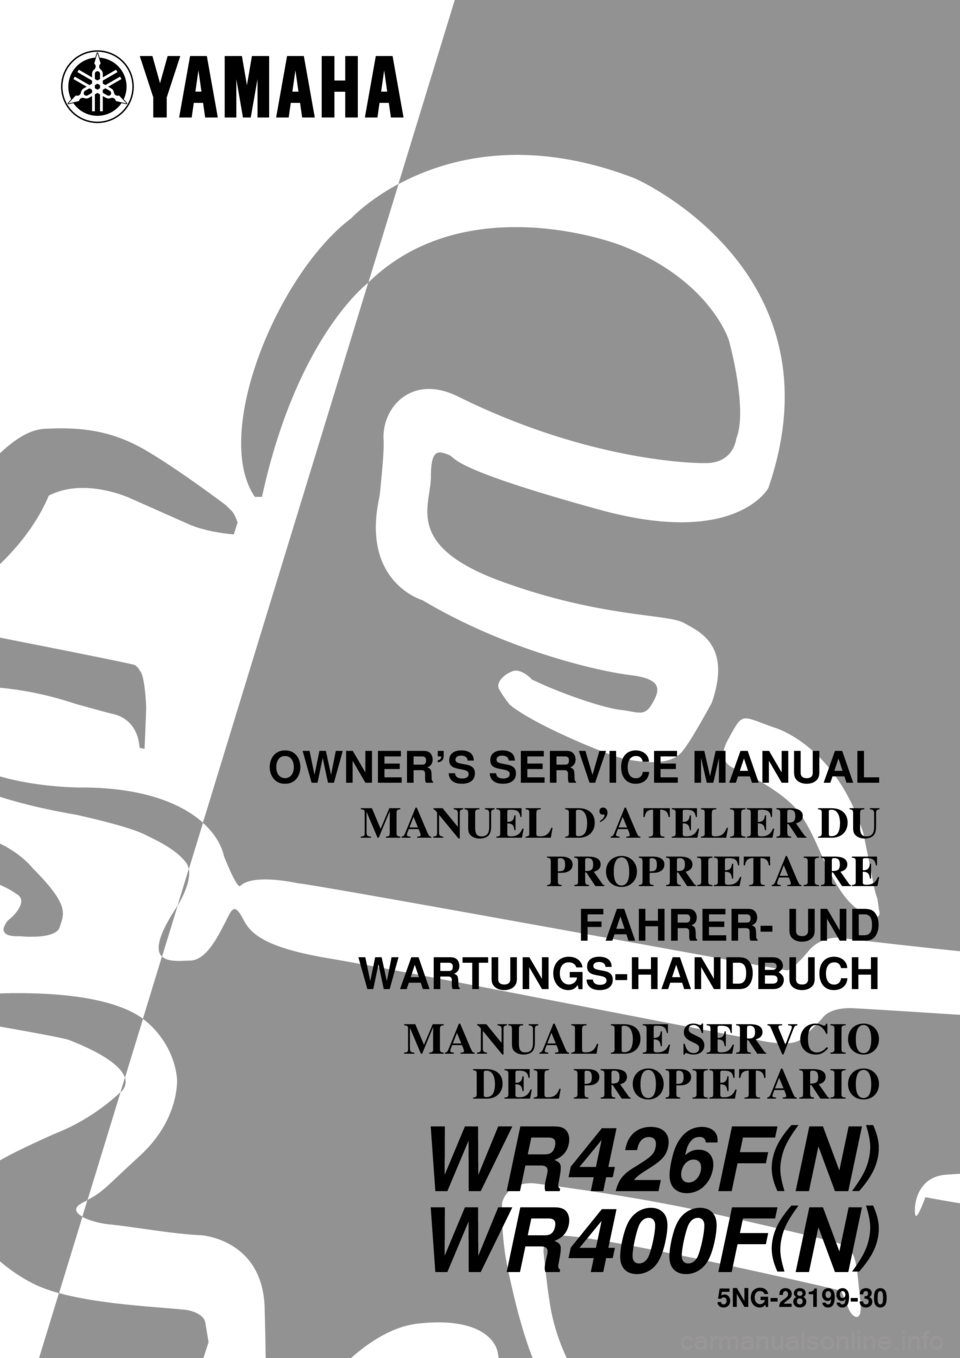 YAMAHA WR 426F 2001  Betriebsanleitungen (in German)      
 
 
 
5NG-28199-30
WR426F(N)
WR400F(N)
OWNER’S SERVICE MANUAL
MANUEL D’ATELIER DU
PROPRIETAIRE
FAHRER- UND
WARTUNGS-HANDBUCH
MANUAL DE SERVCIO
DEL PROPIETARIO 